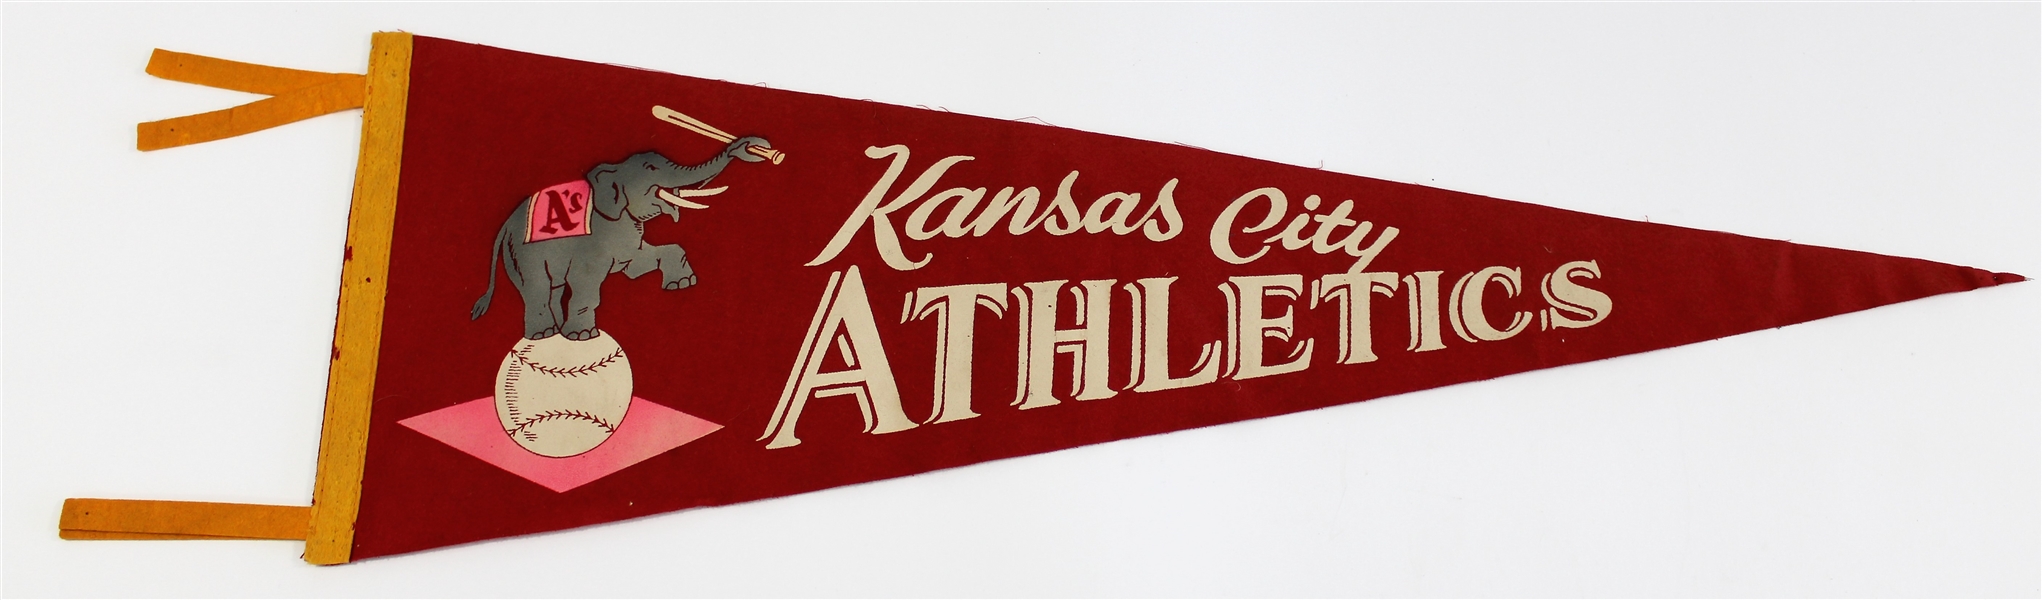 Kansas City Athletics 1959 Pennant - Rare